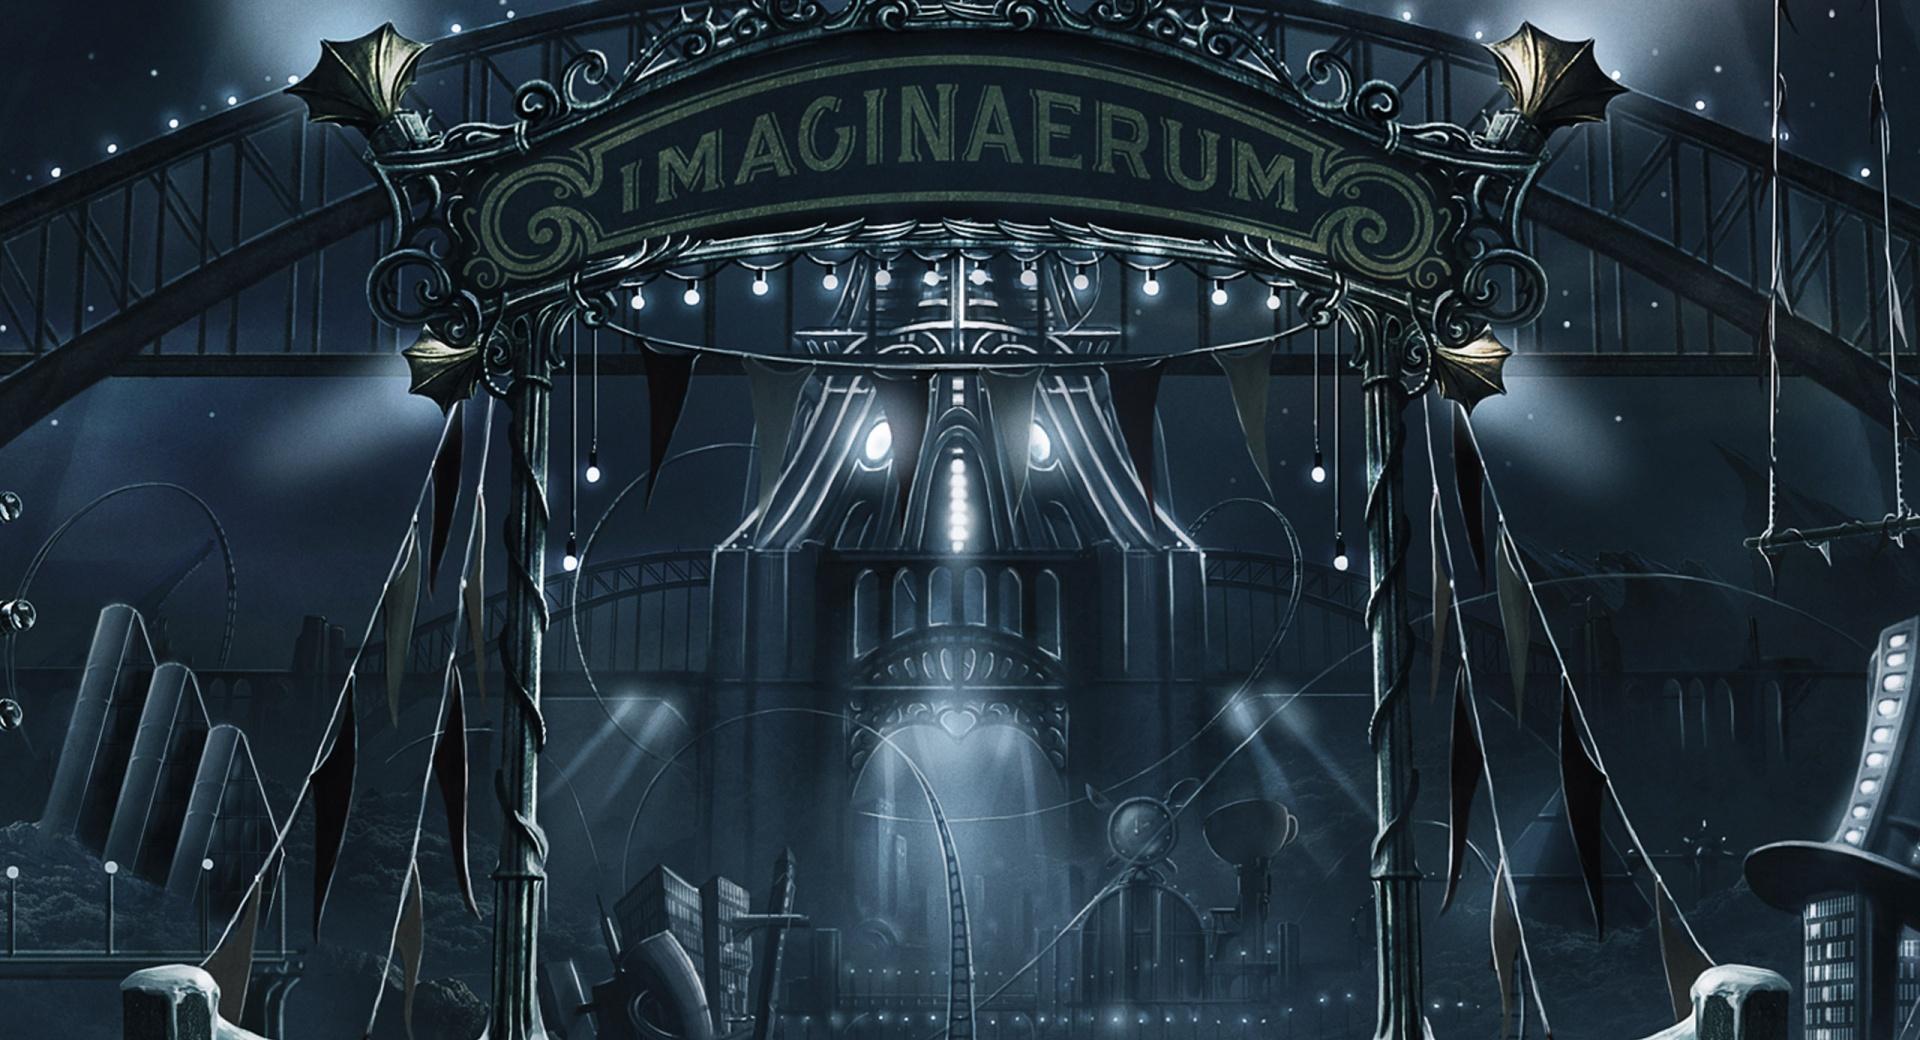 Imaginaerum - Nightwish at 1024 x 768 size wallpapers HD quality